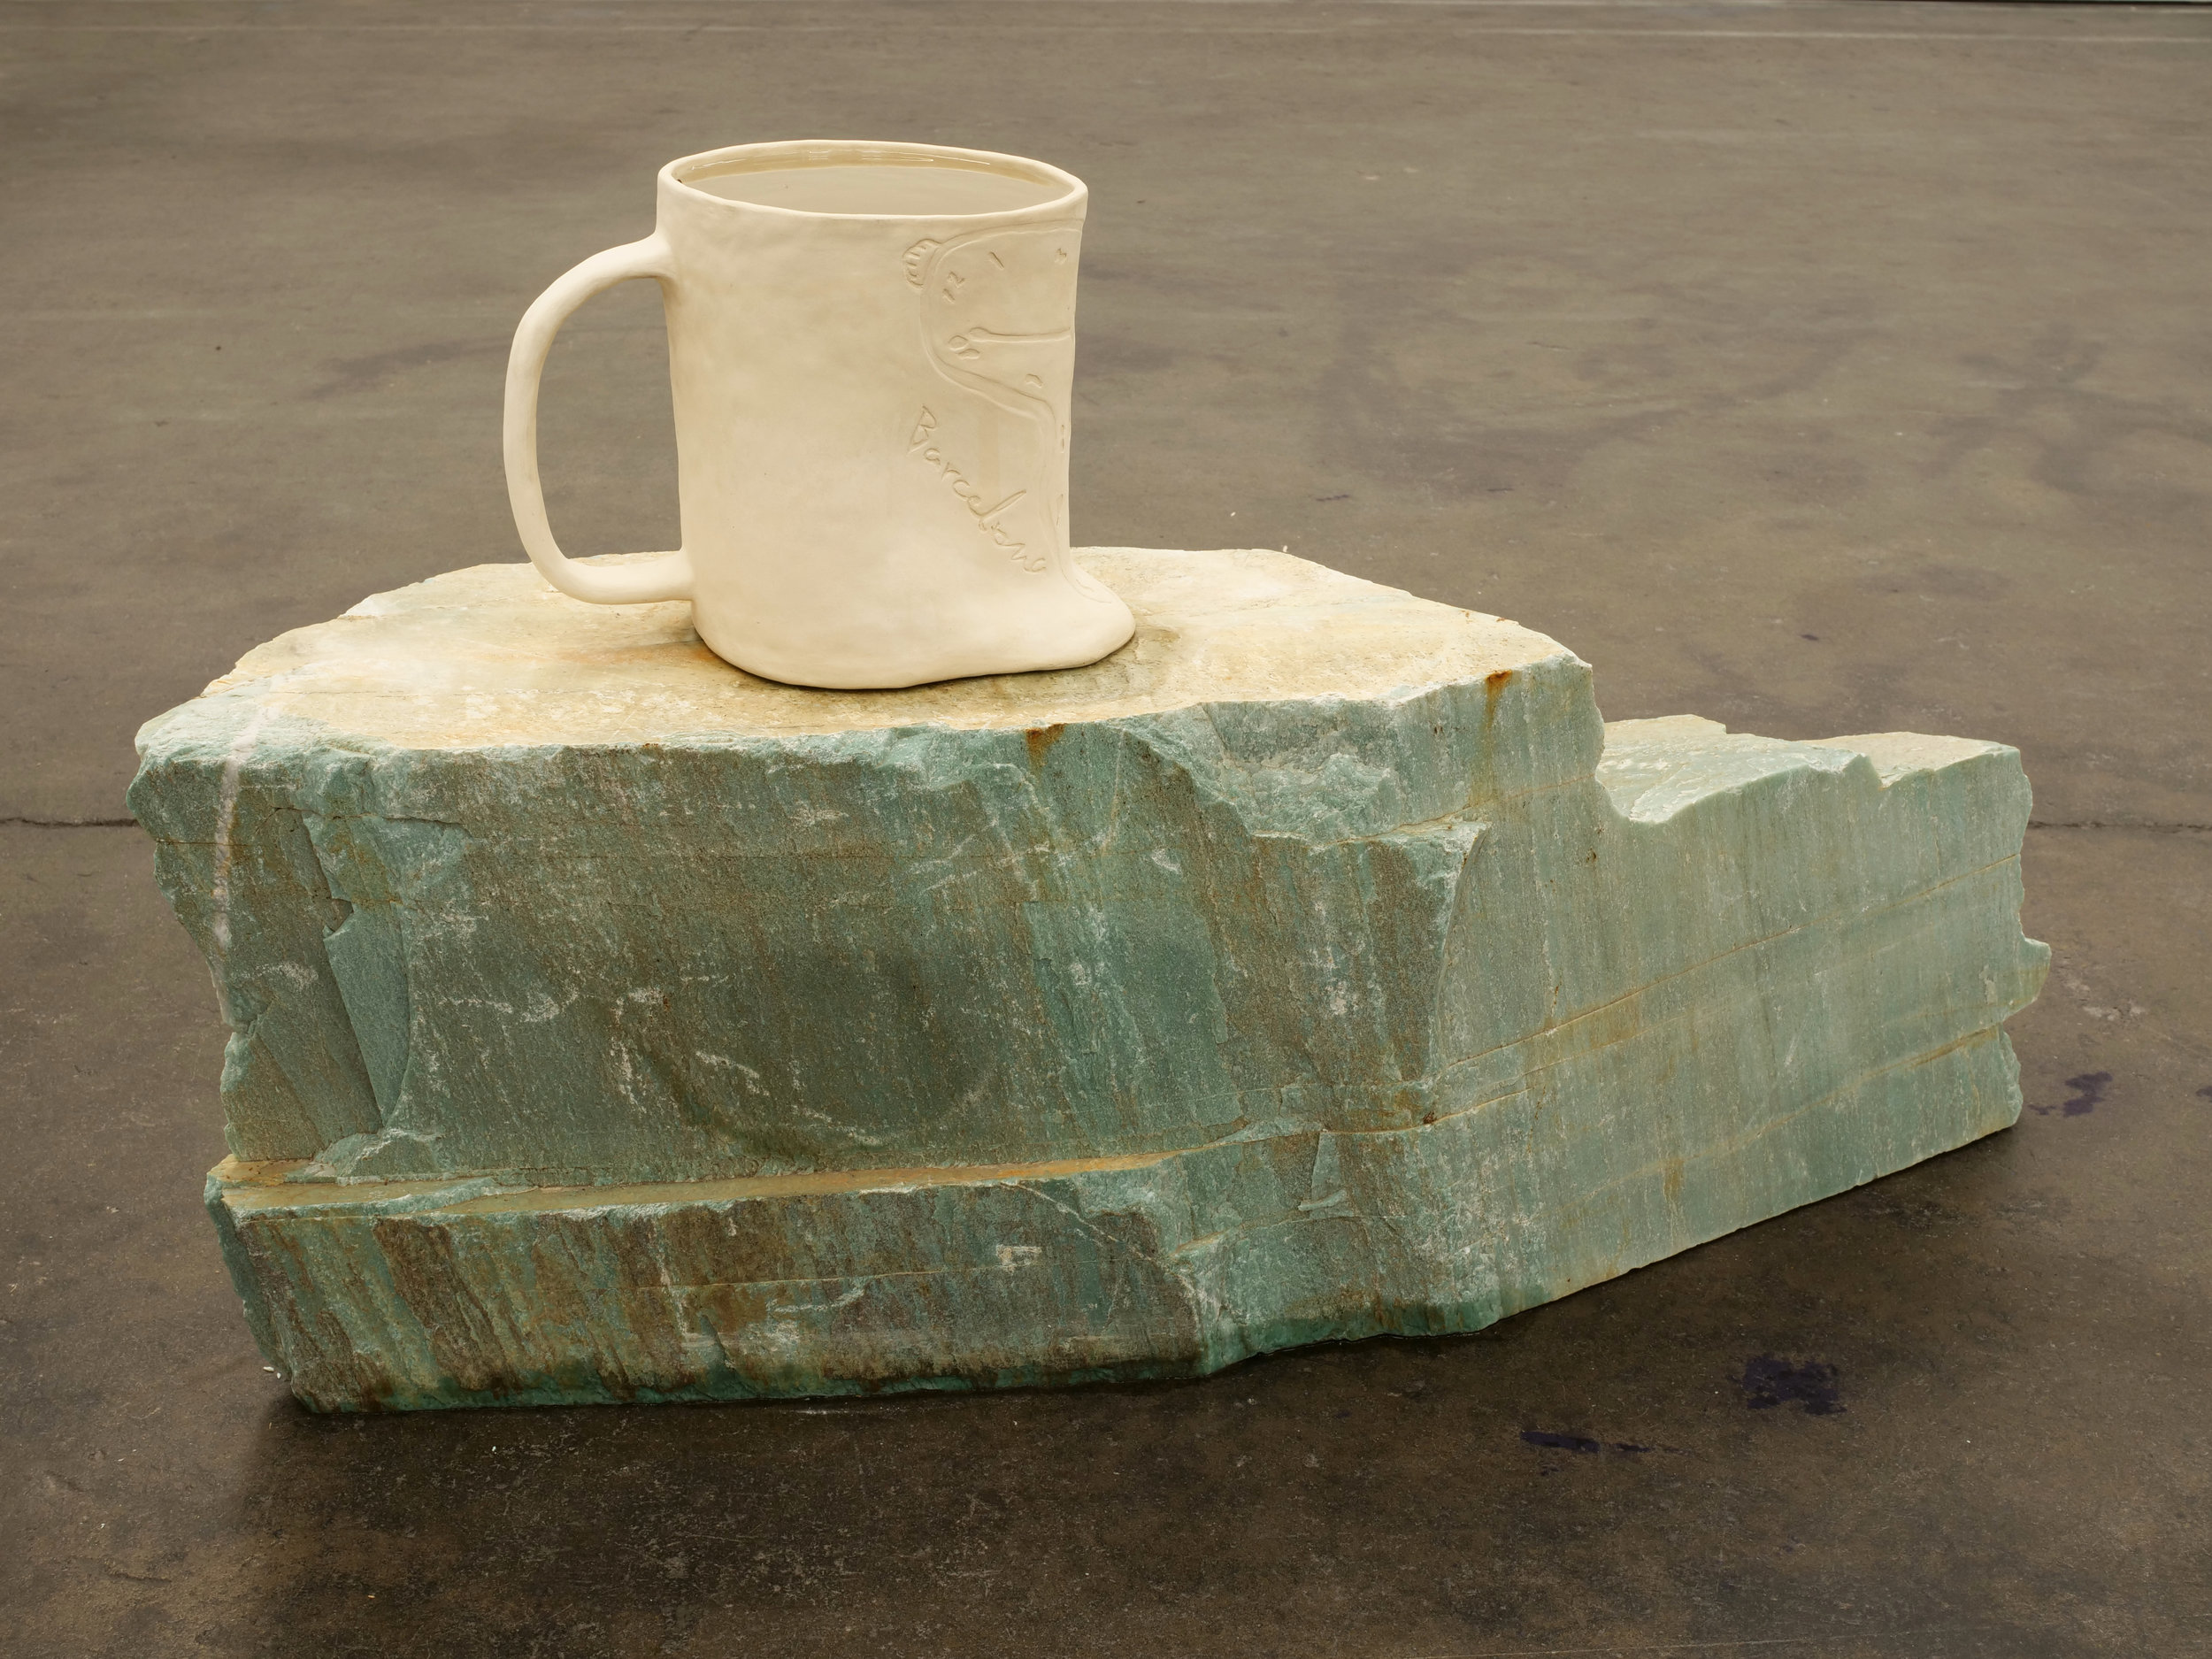  Will Rogan,  Filter (Barcelona) , 2018, Ceramic, sea water, stone, 26 1/2 x 48 x 13 1/2 in 